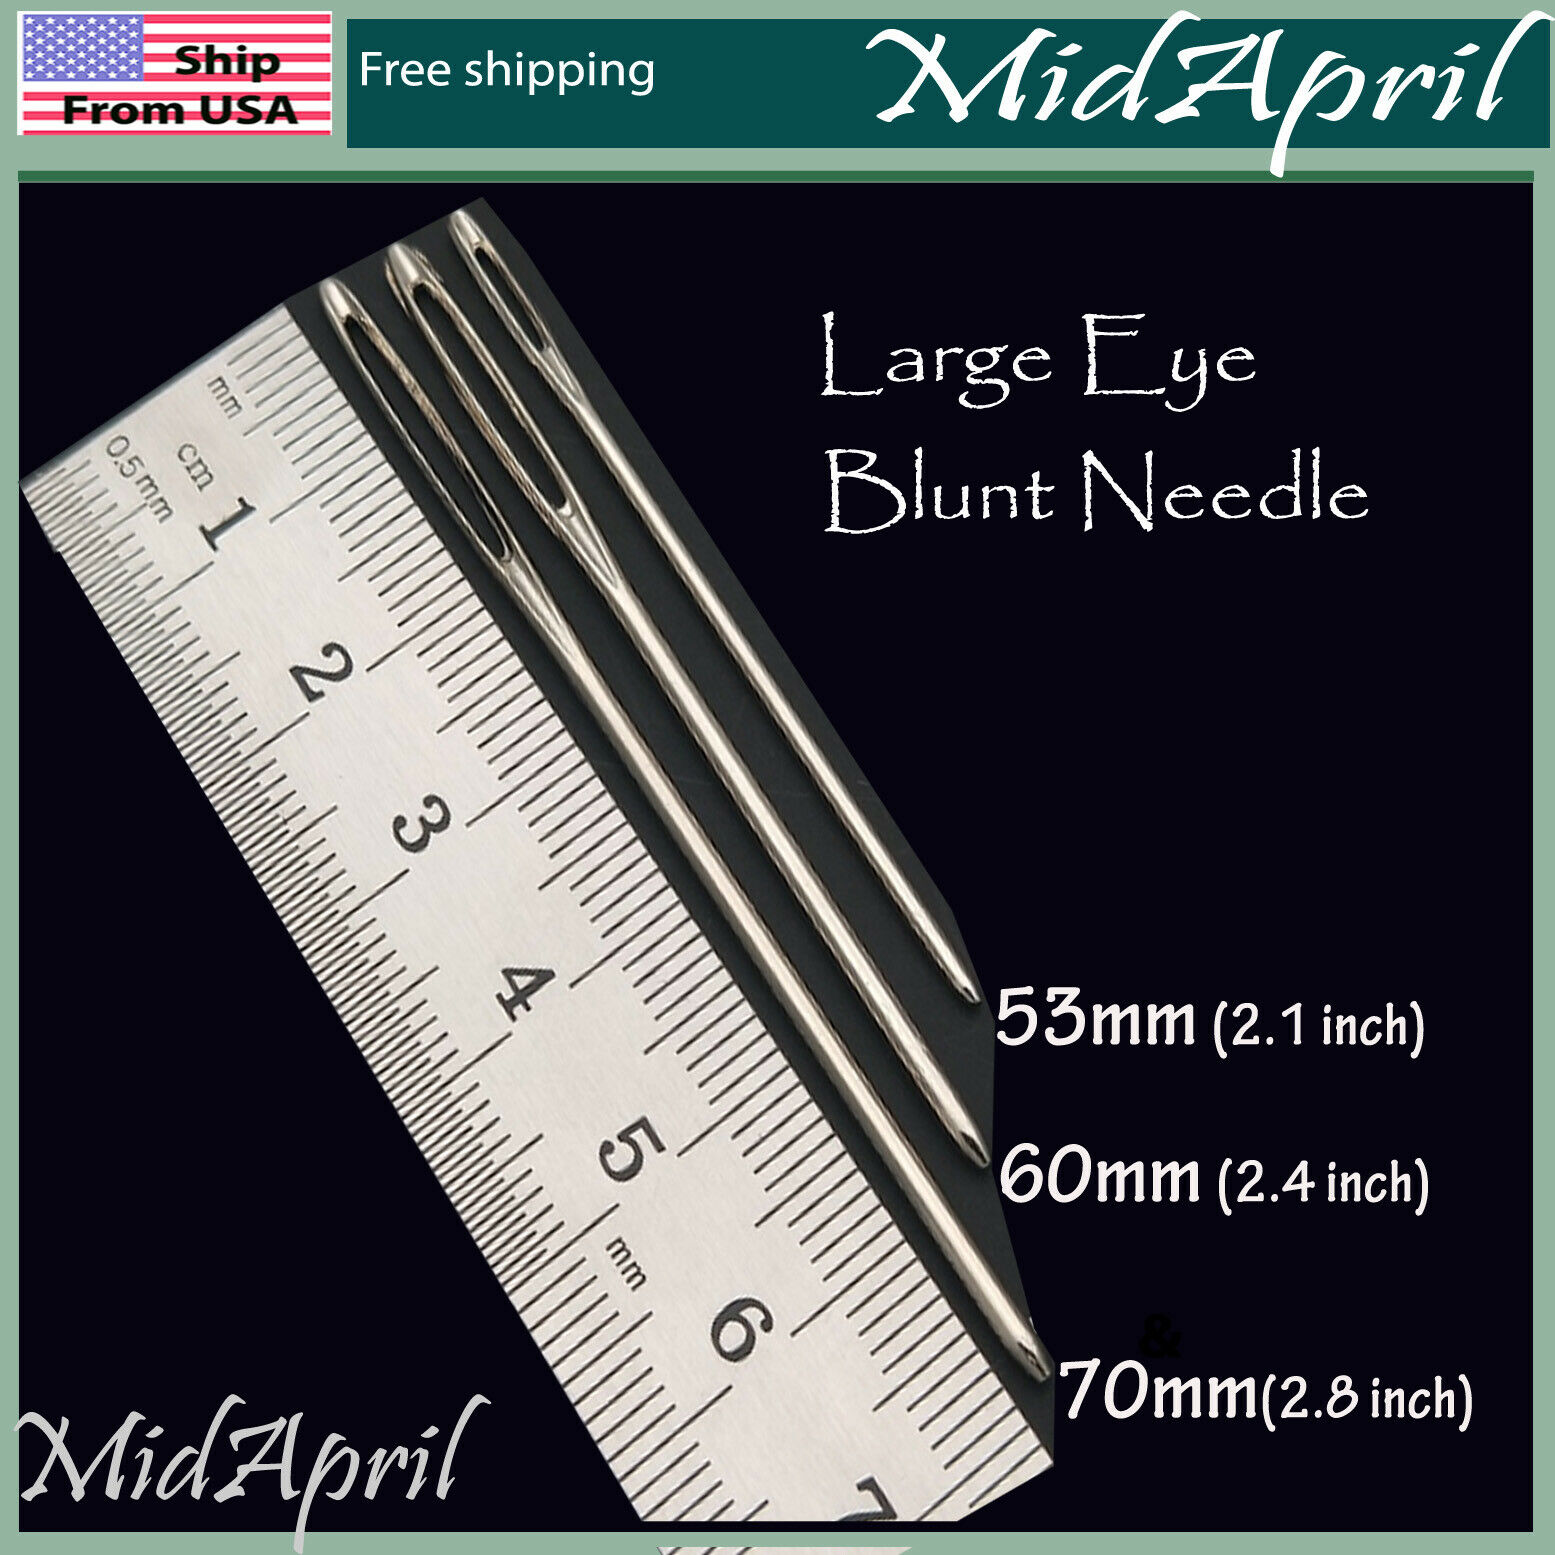 Large Eye Blunt Needles Steel Yarn Knitting Needles Sewing Needles -3 Sizes